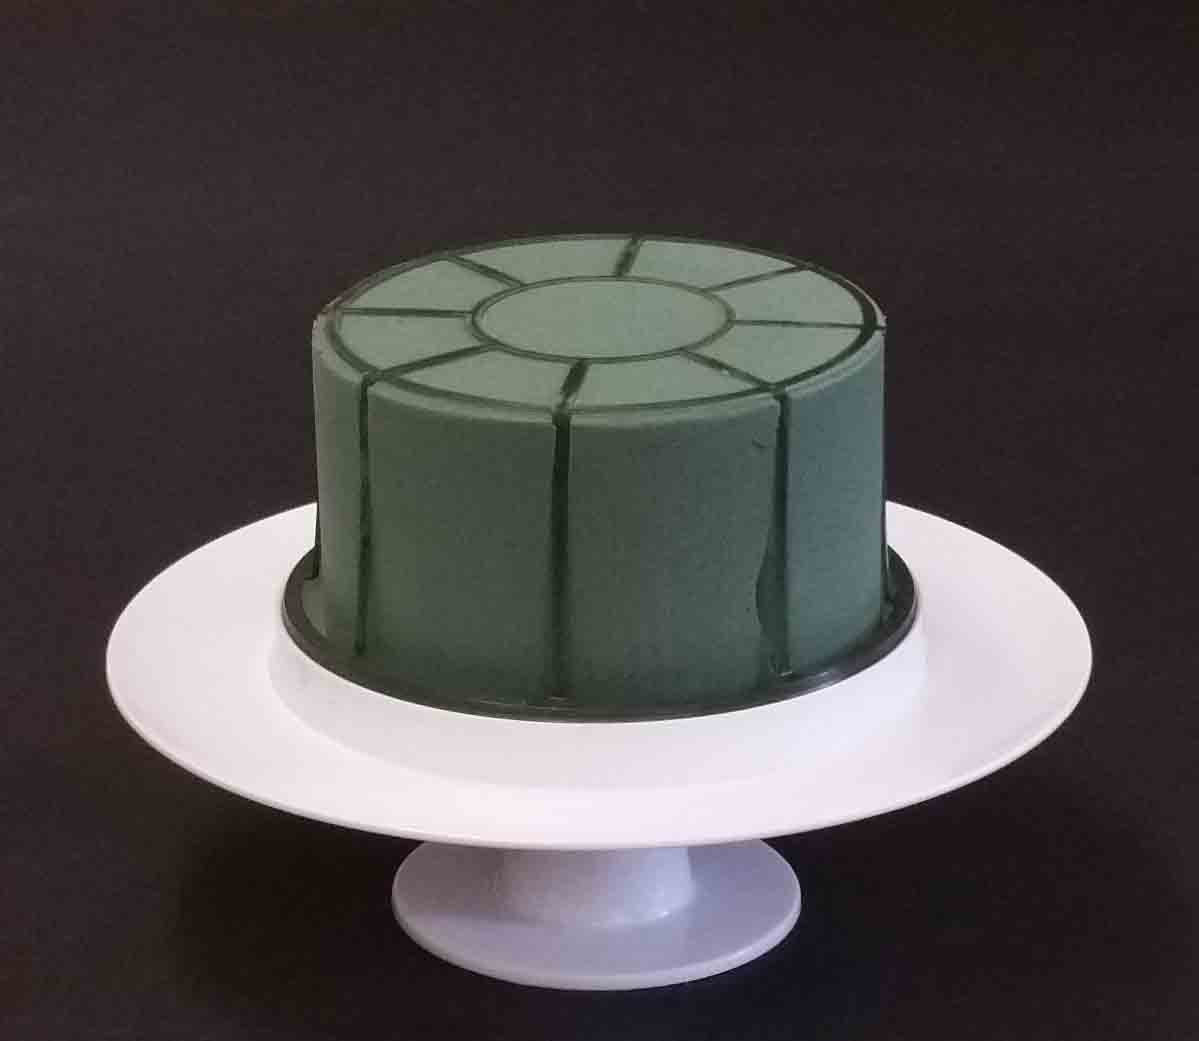 4006 - 10.5" Aquafoam Cake Kit - 14.85 ea